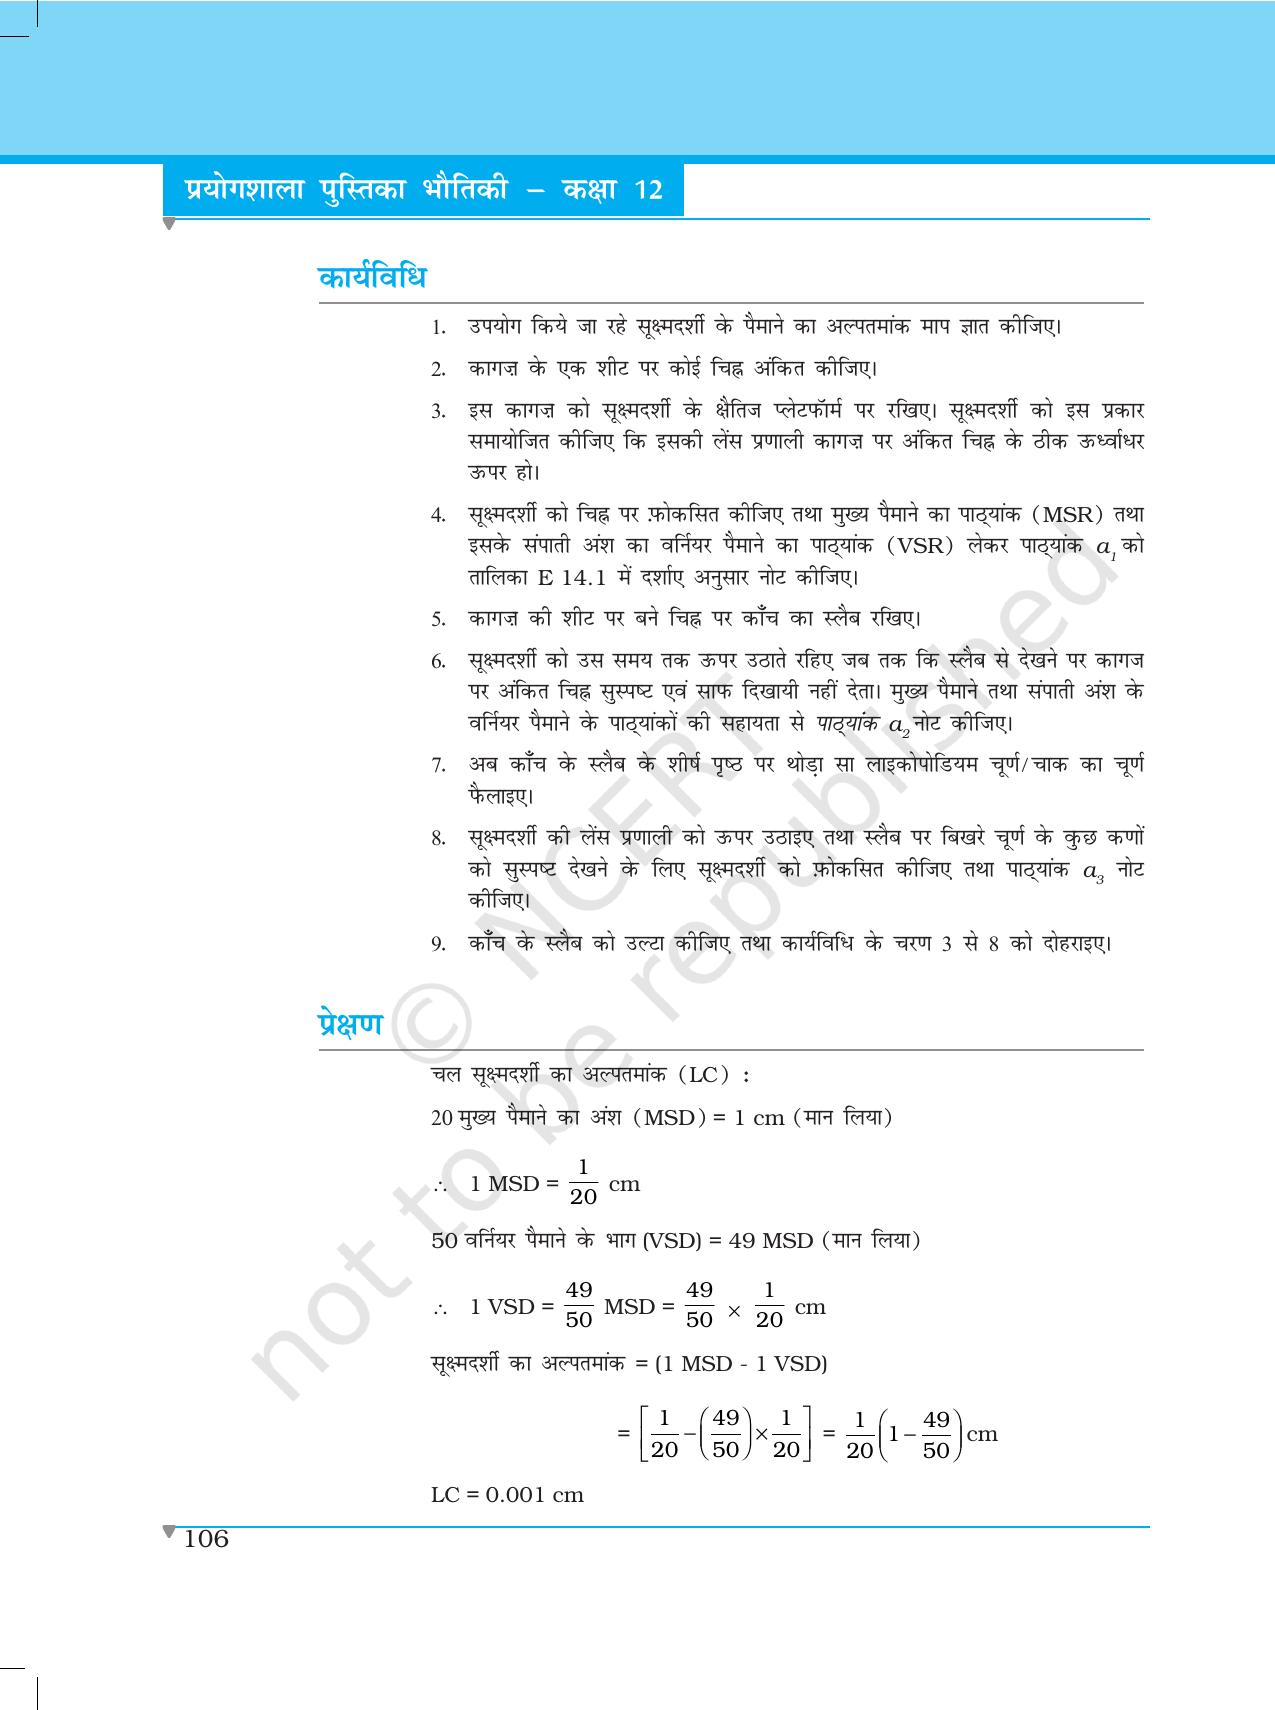 NCERT Laboratory Manuals for Class XII भौतिकी - प्रयोग (14 - 18) - Page 2